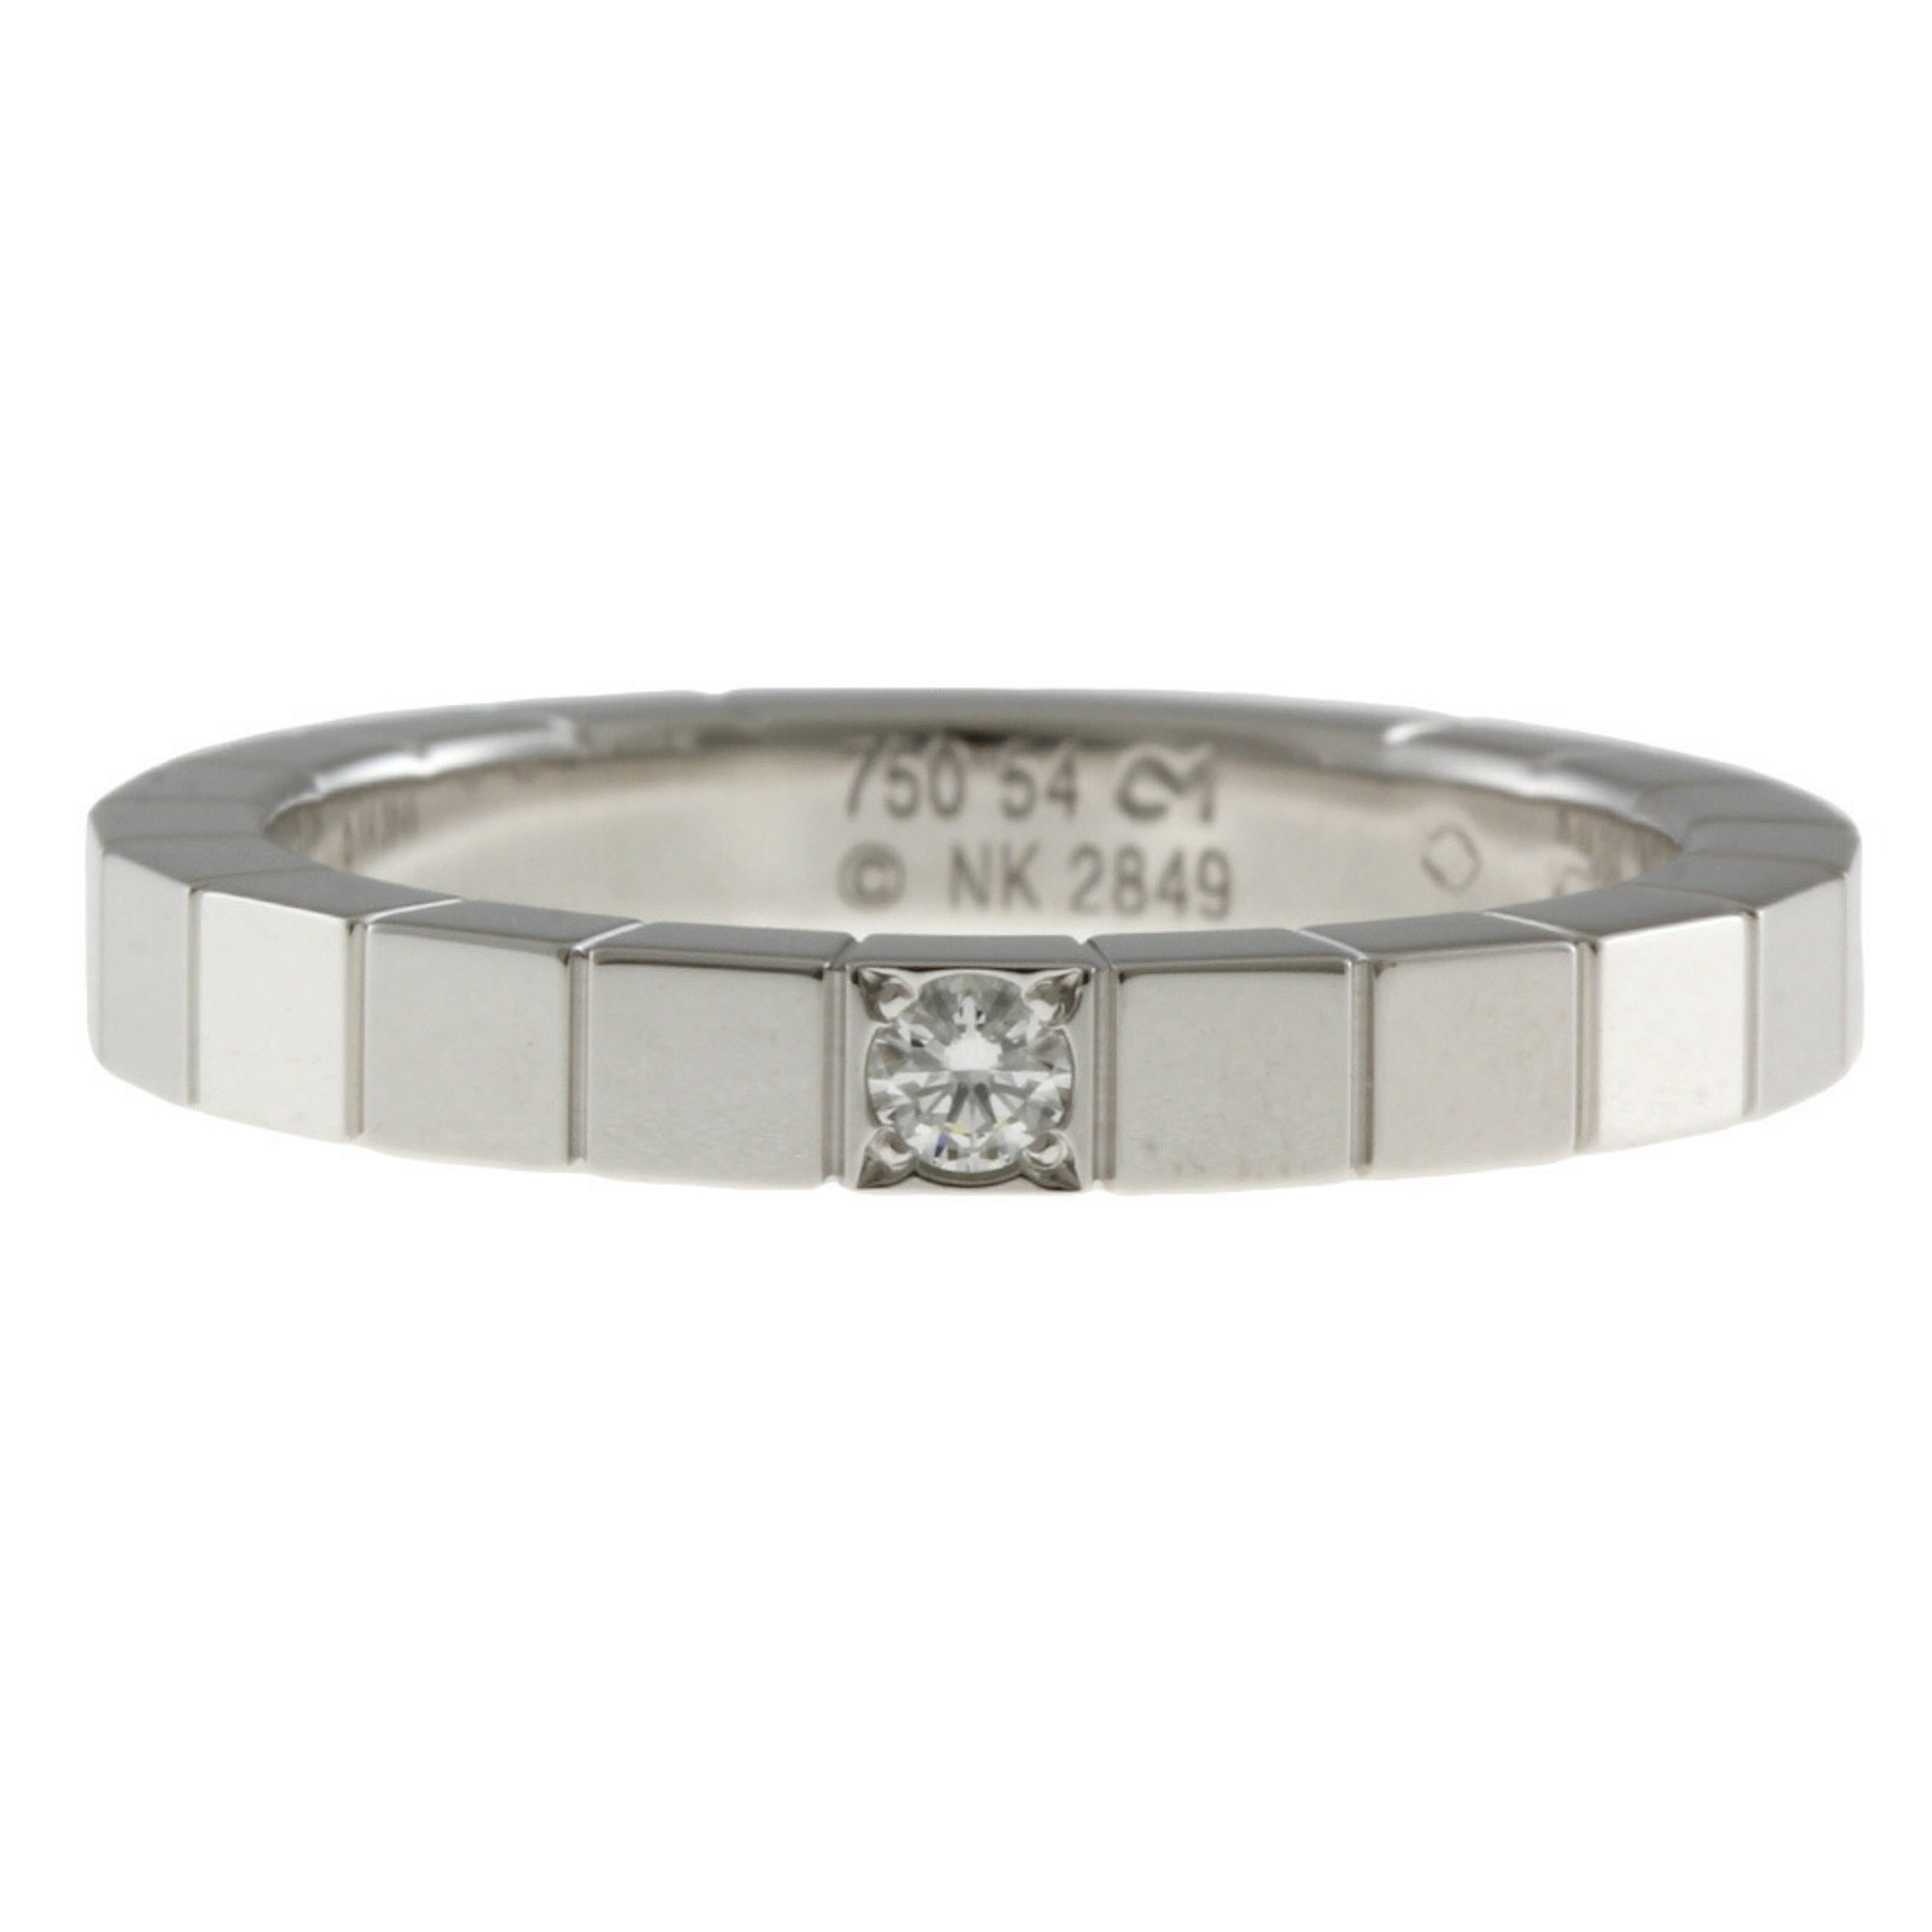 Cartier Raniere Ring No. 13.5 18K Diamond Women's CARTIER BRJ10000000119388